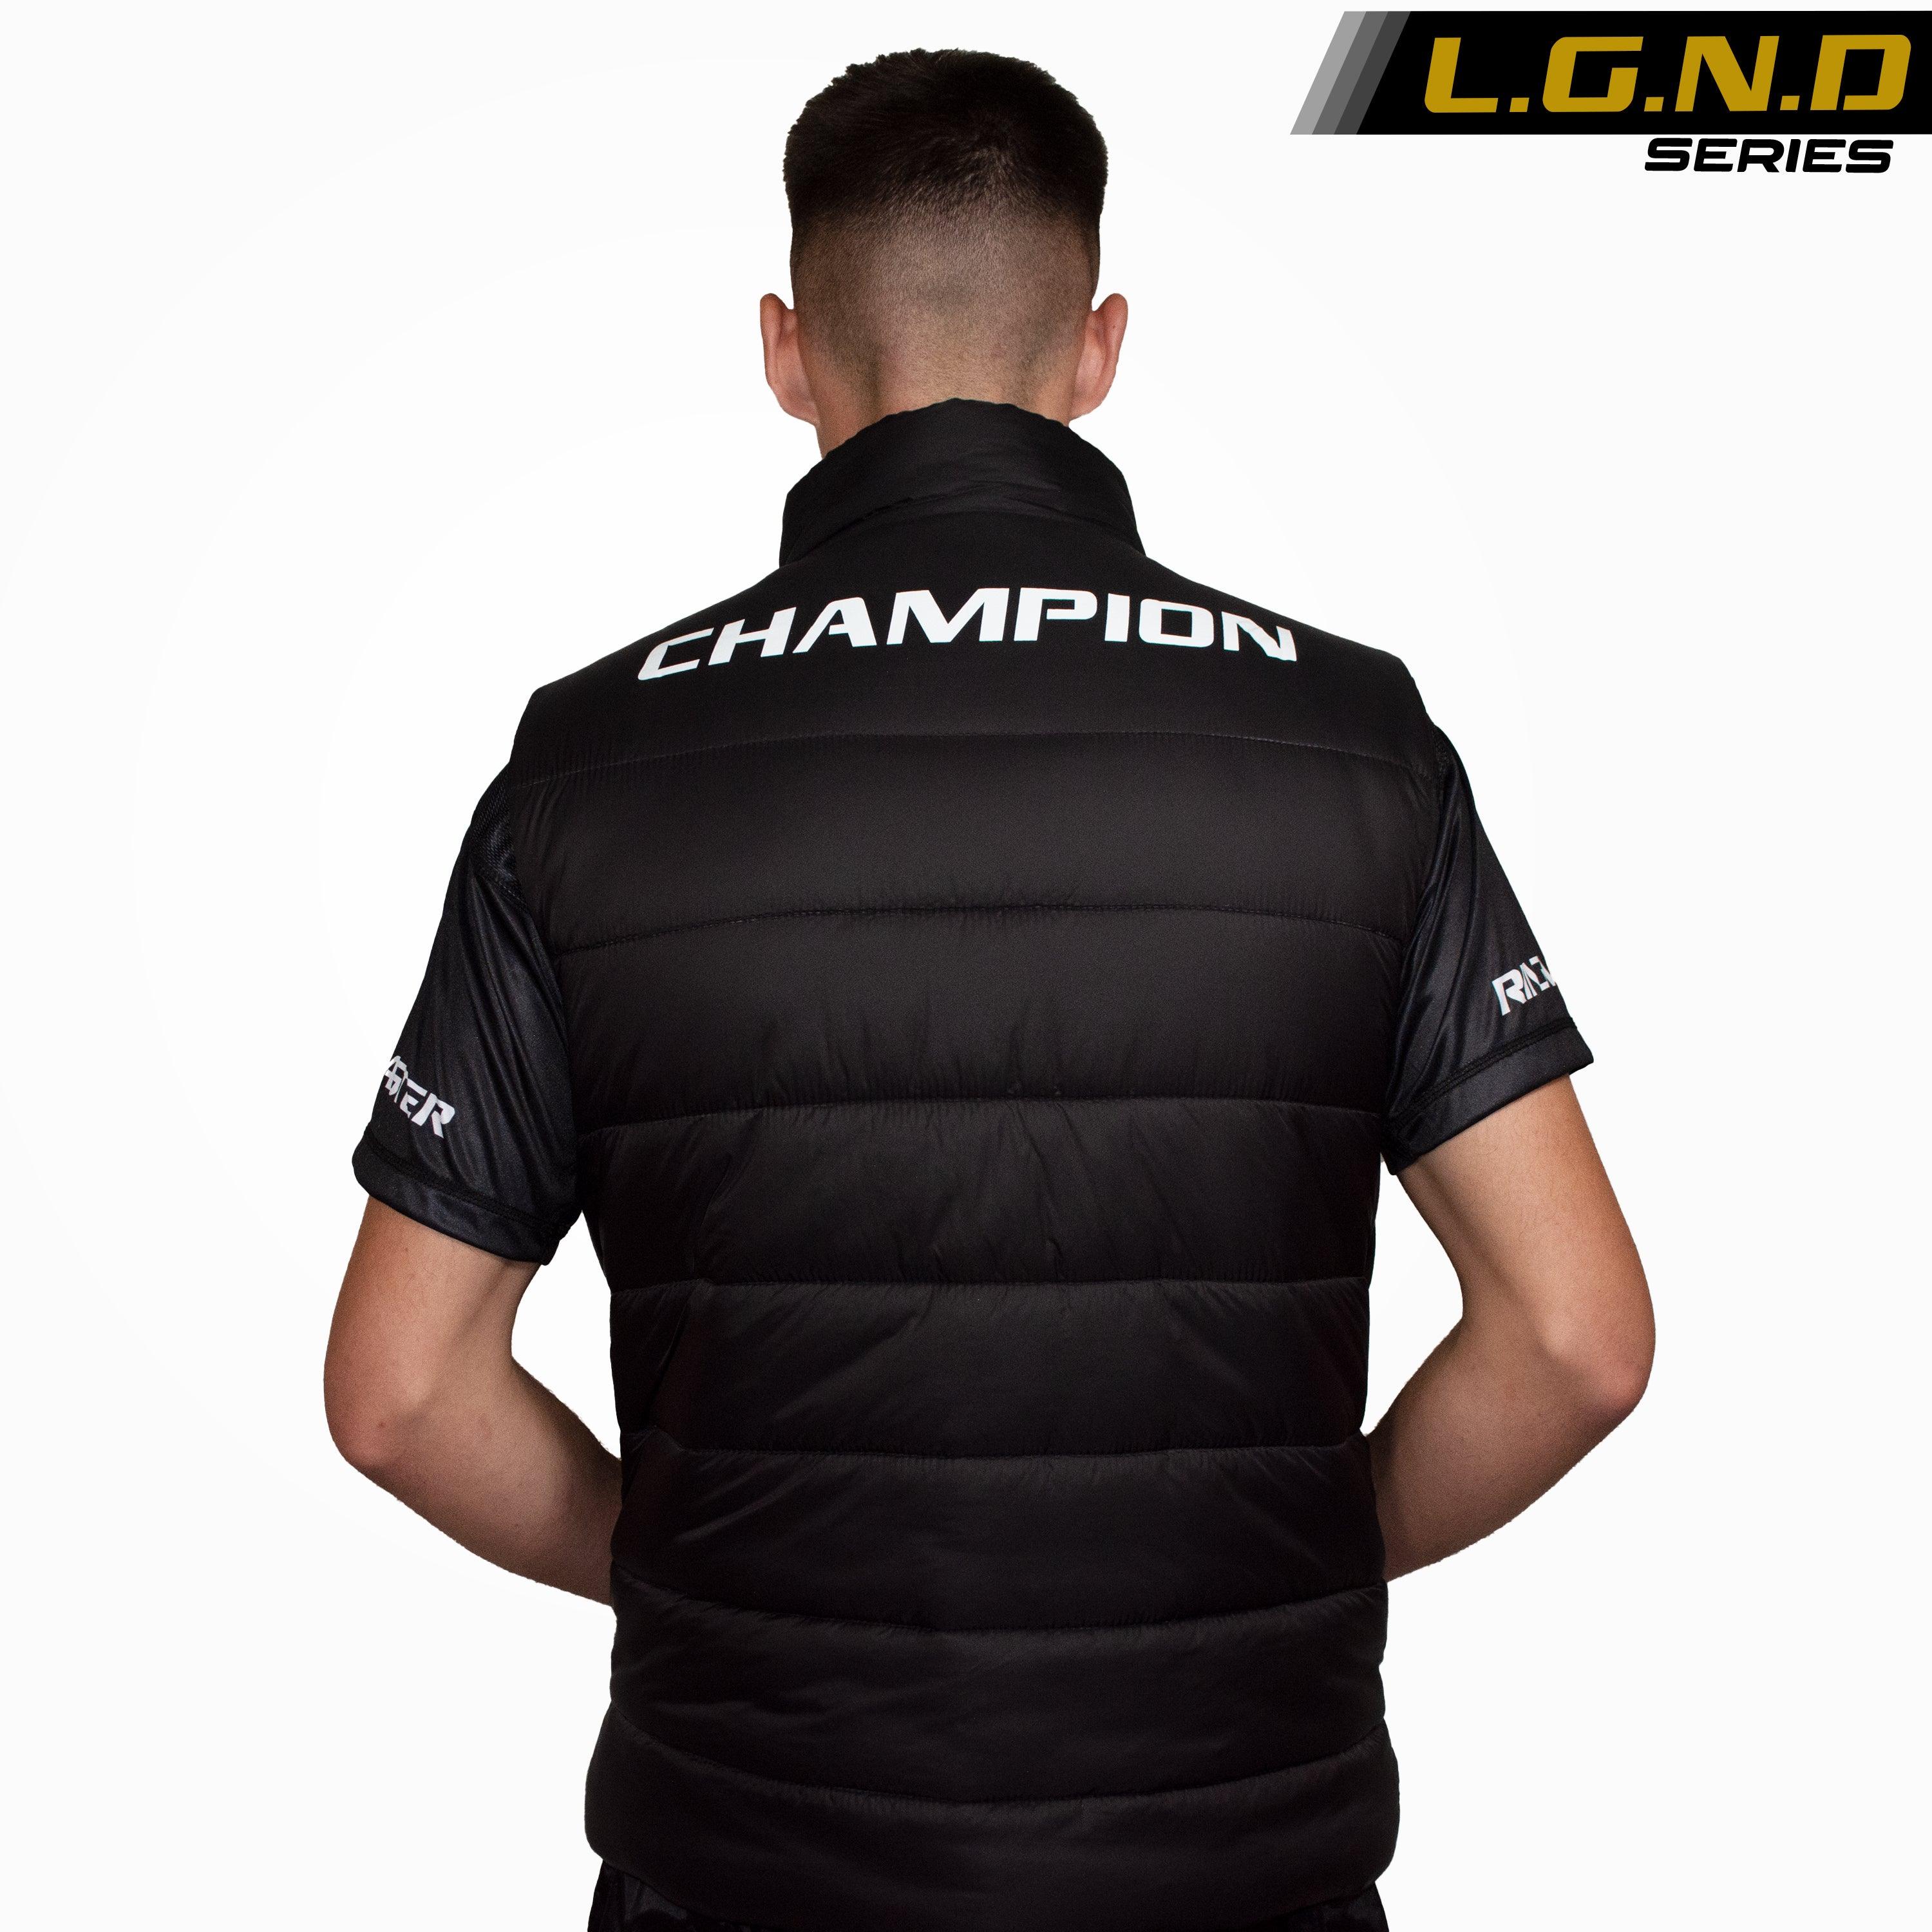 RingMaster Sports Gilet Jacket L.G.N.D Series Black - RINGMASTER SPORTS - Made For Champions